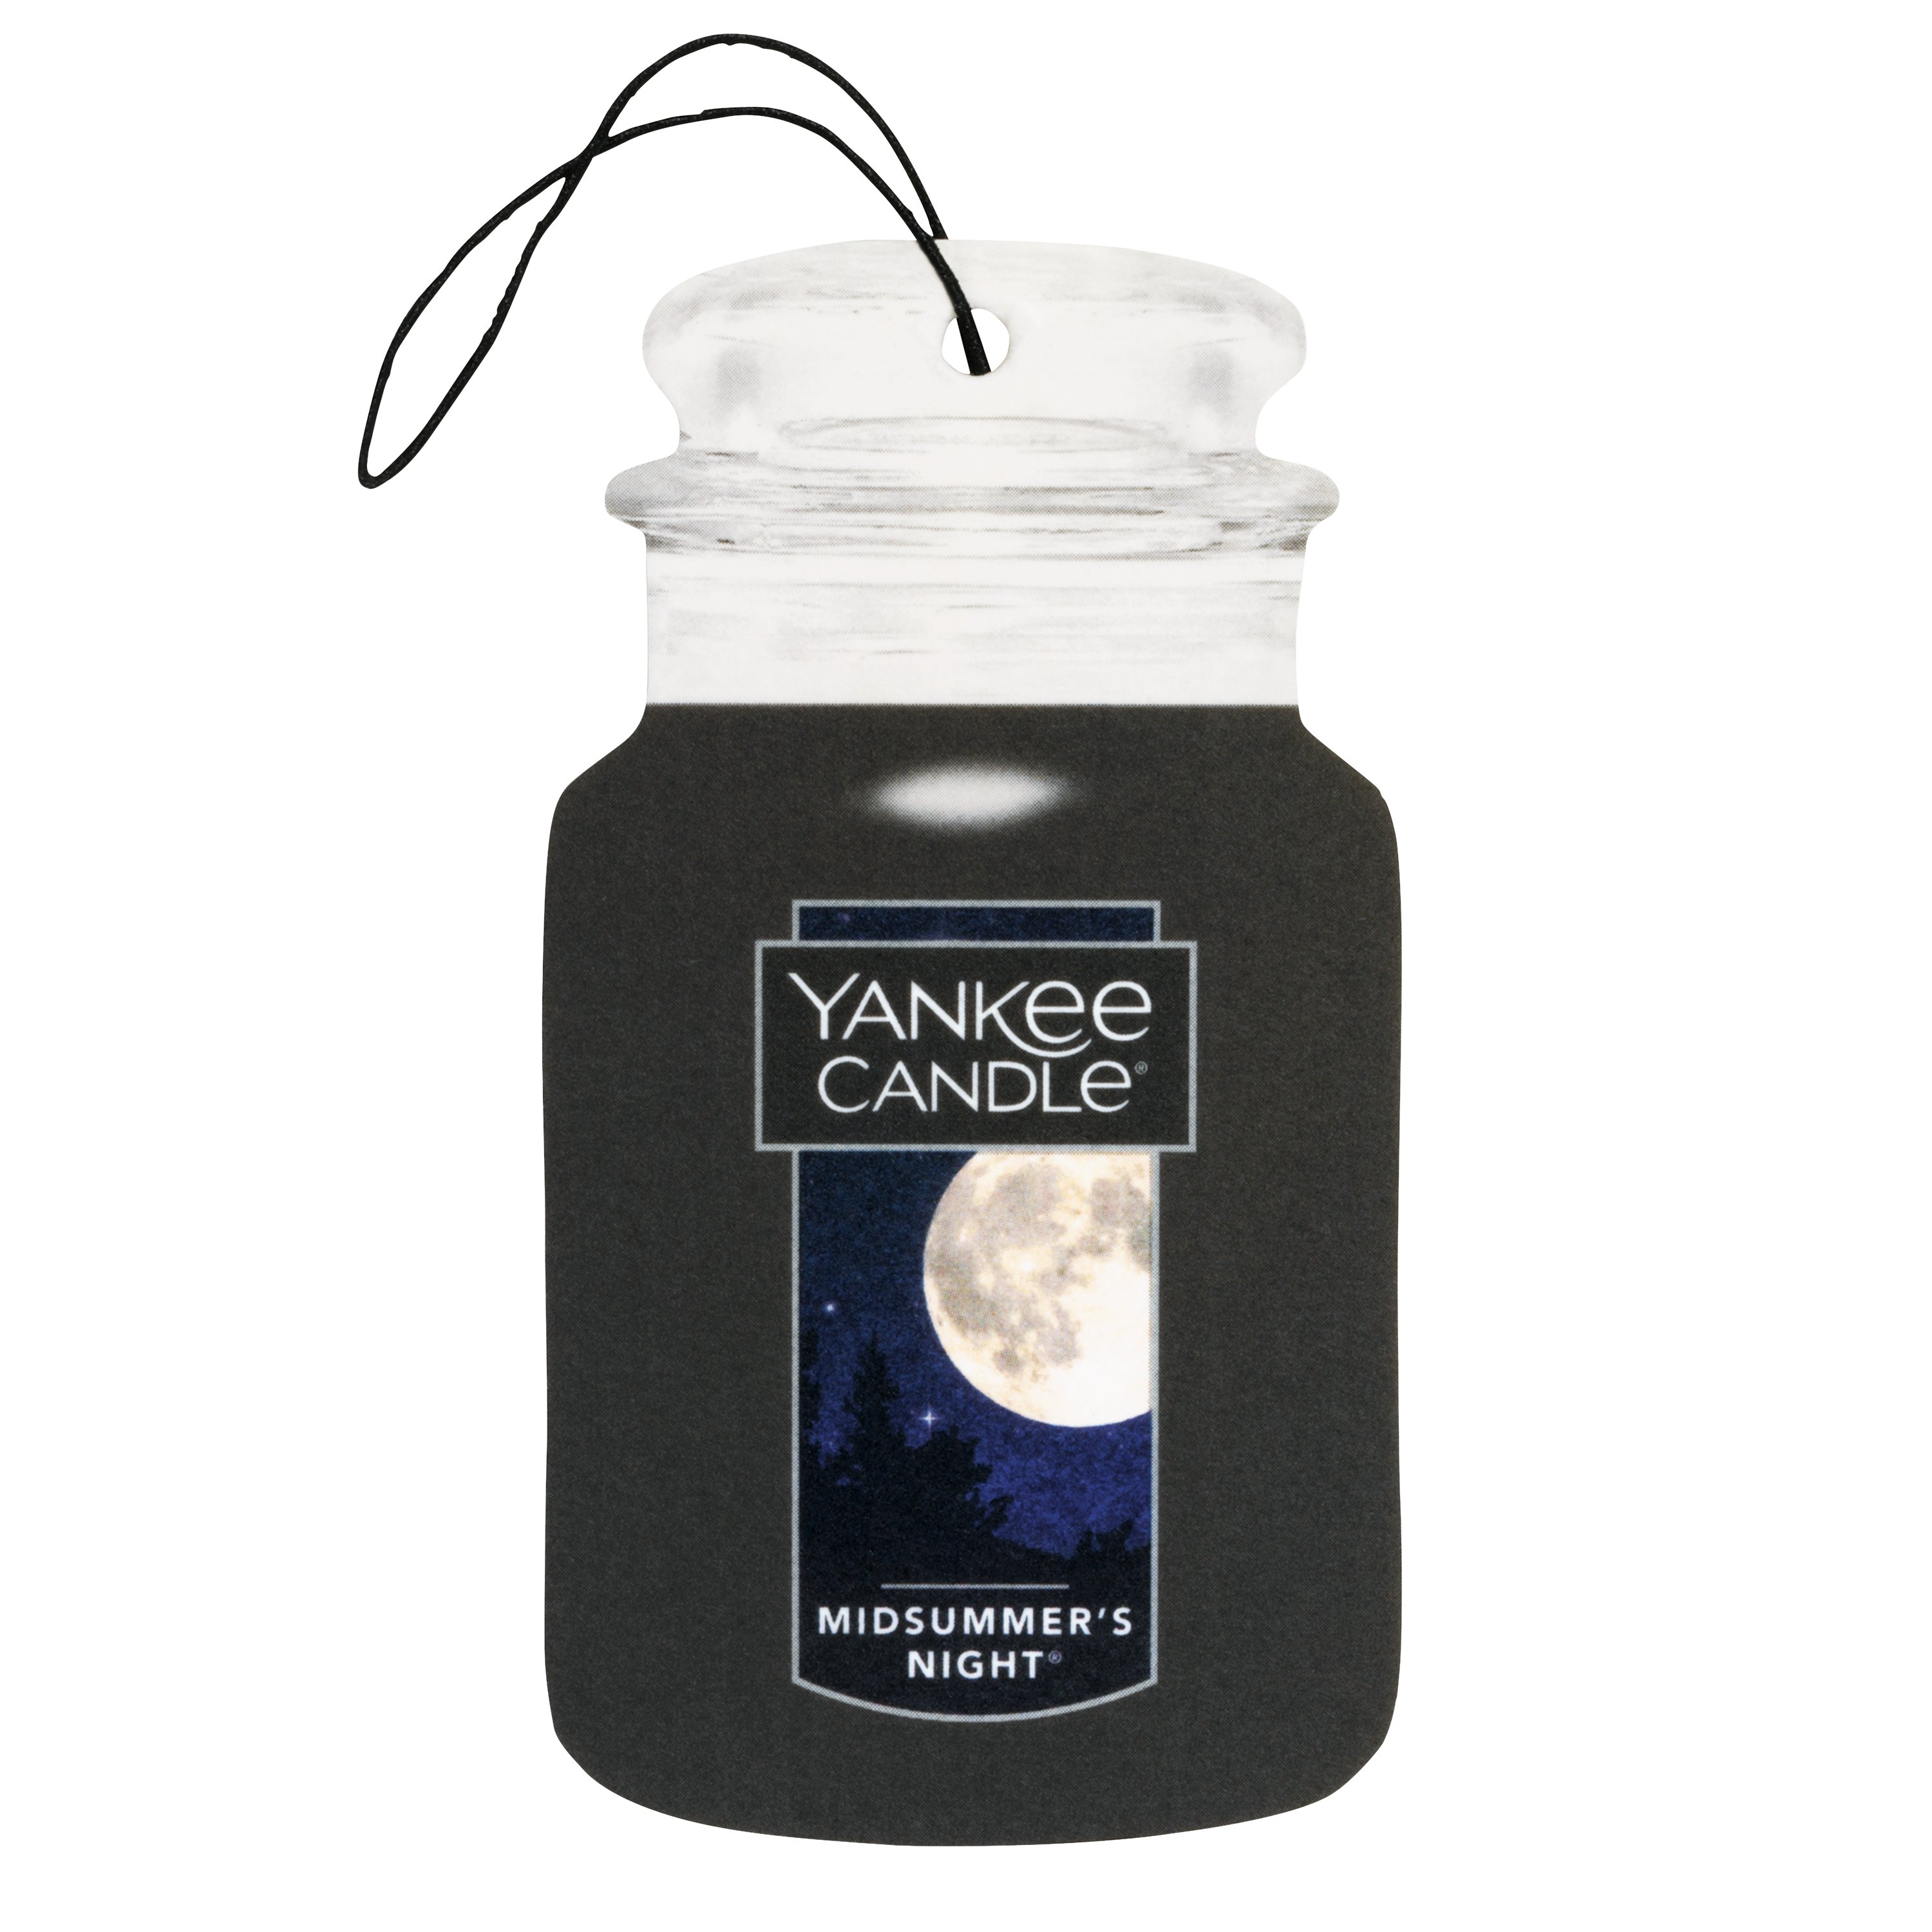 Yankee Candle Midsummer's Night Car Jar Air Freshener